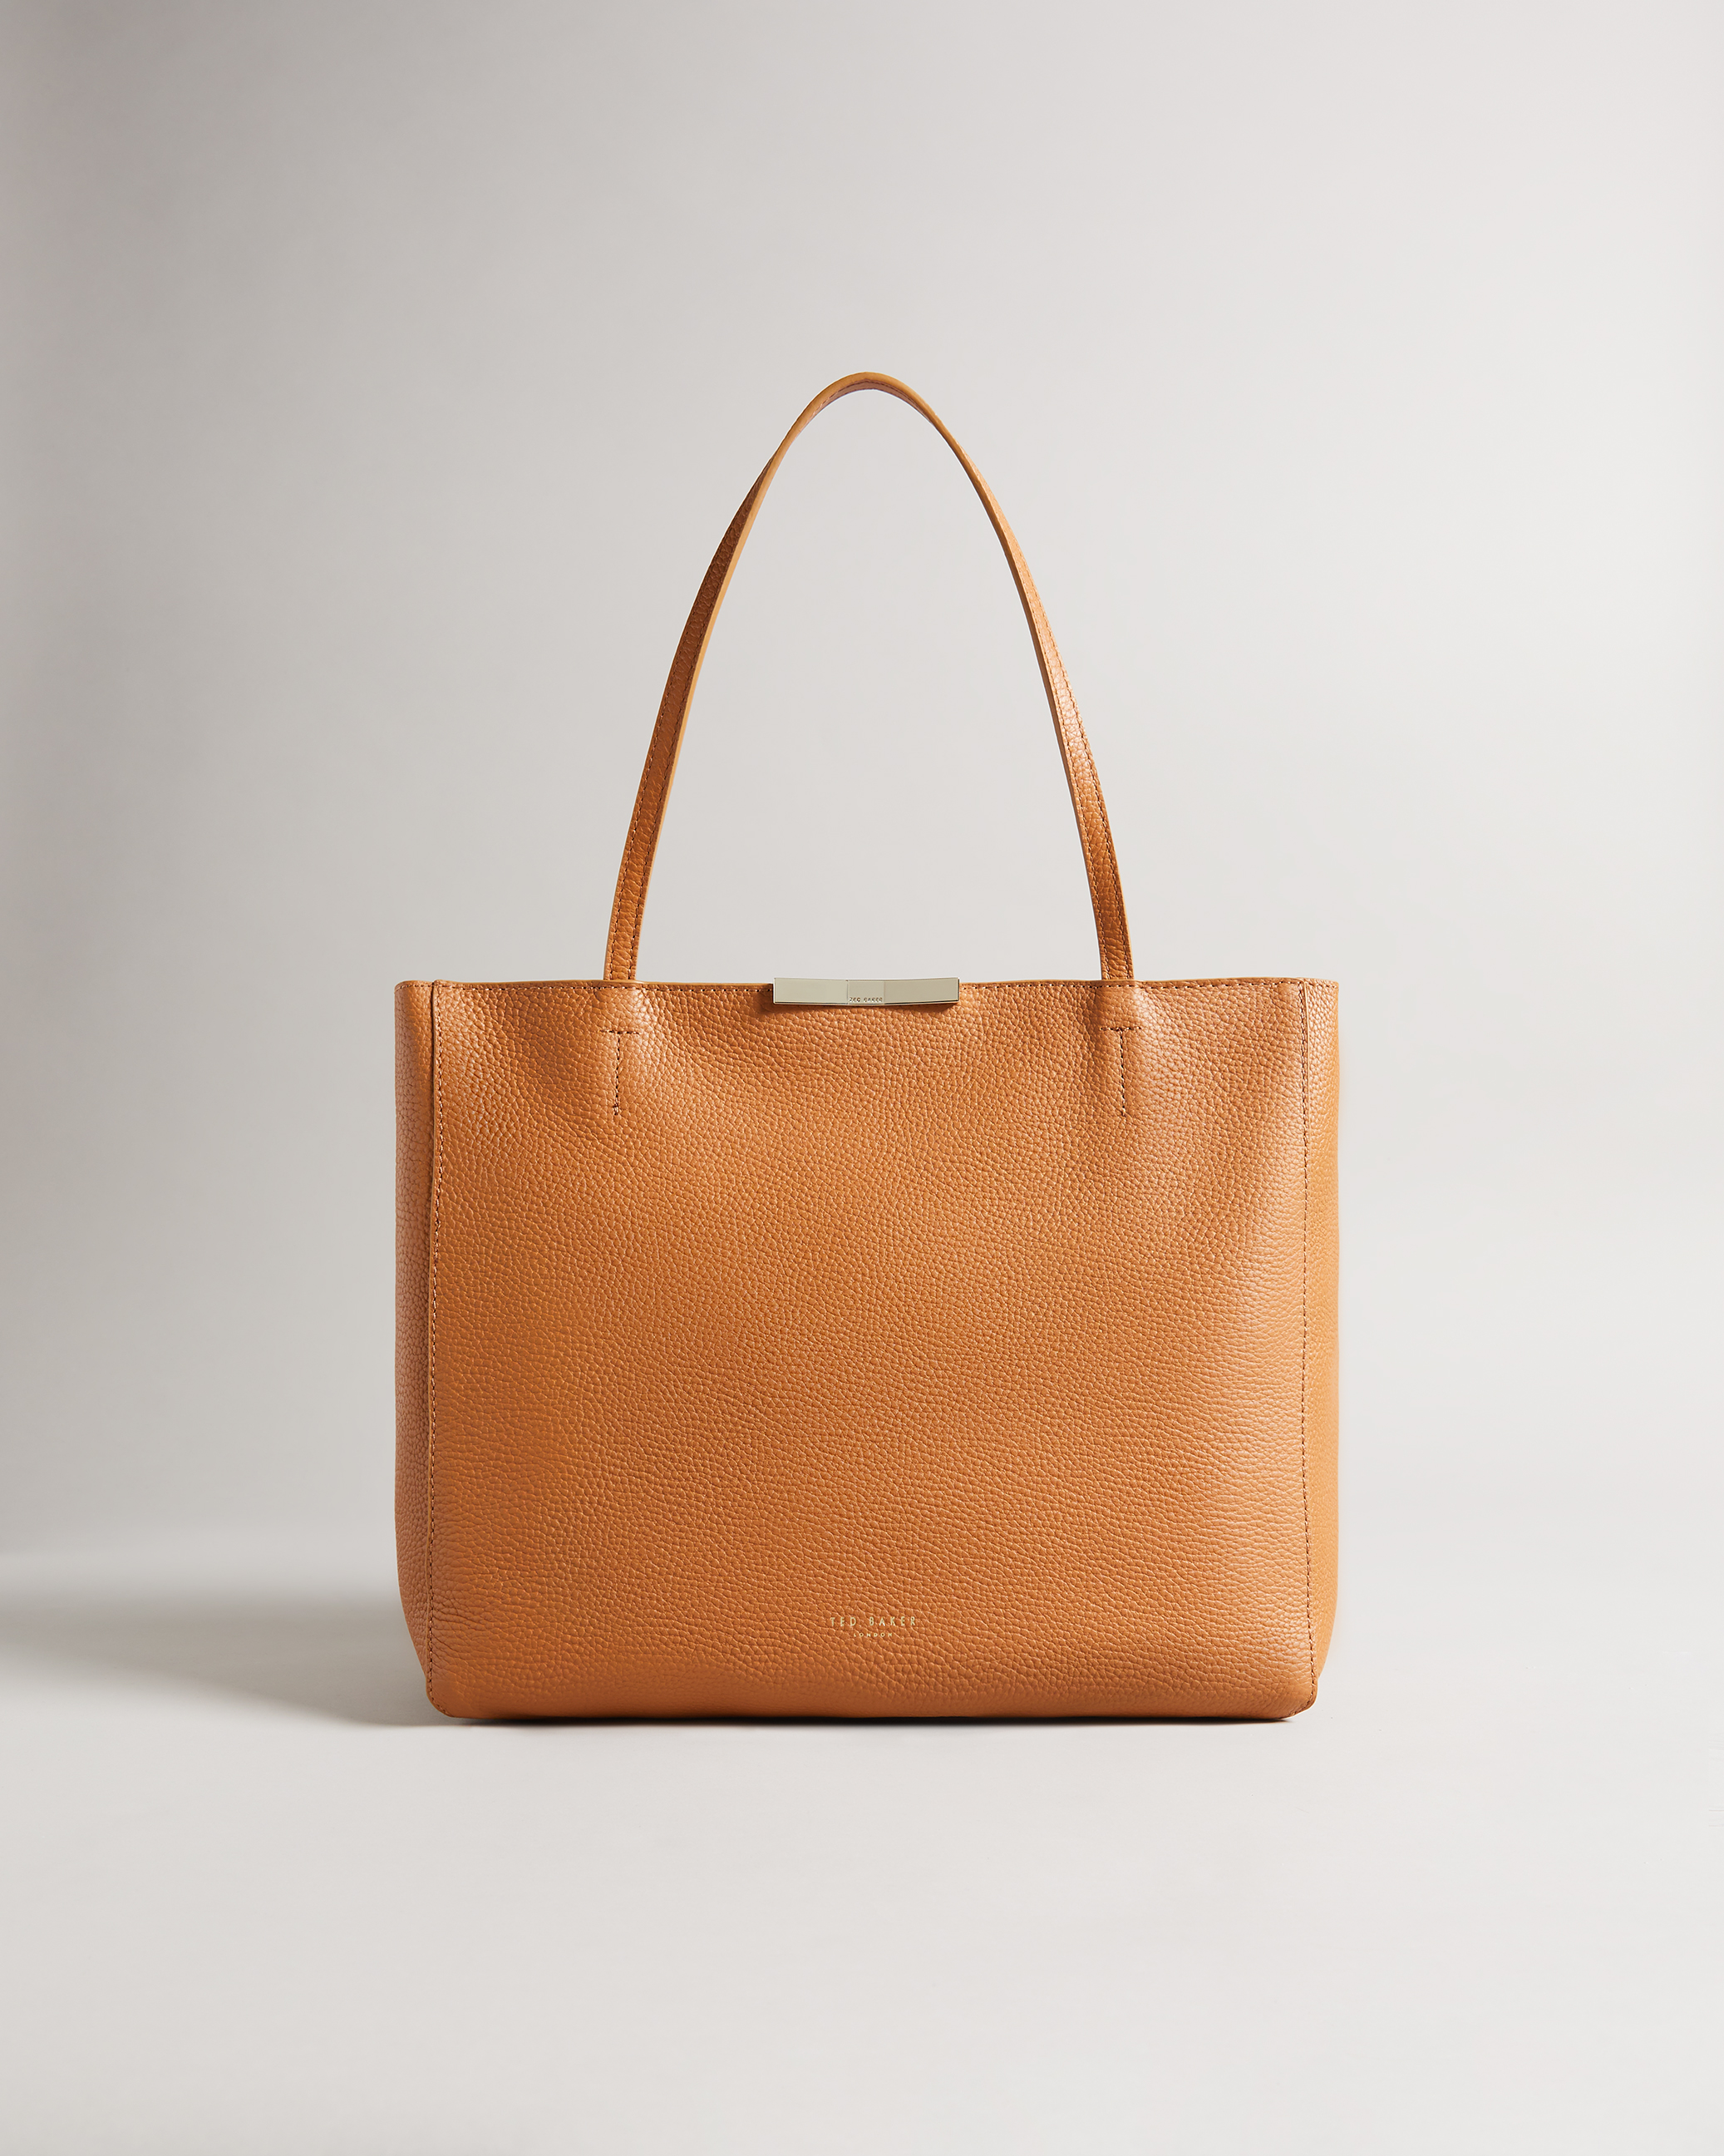 Ted Baker Bags Sale, Handbags, Purses Outlet